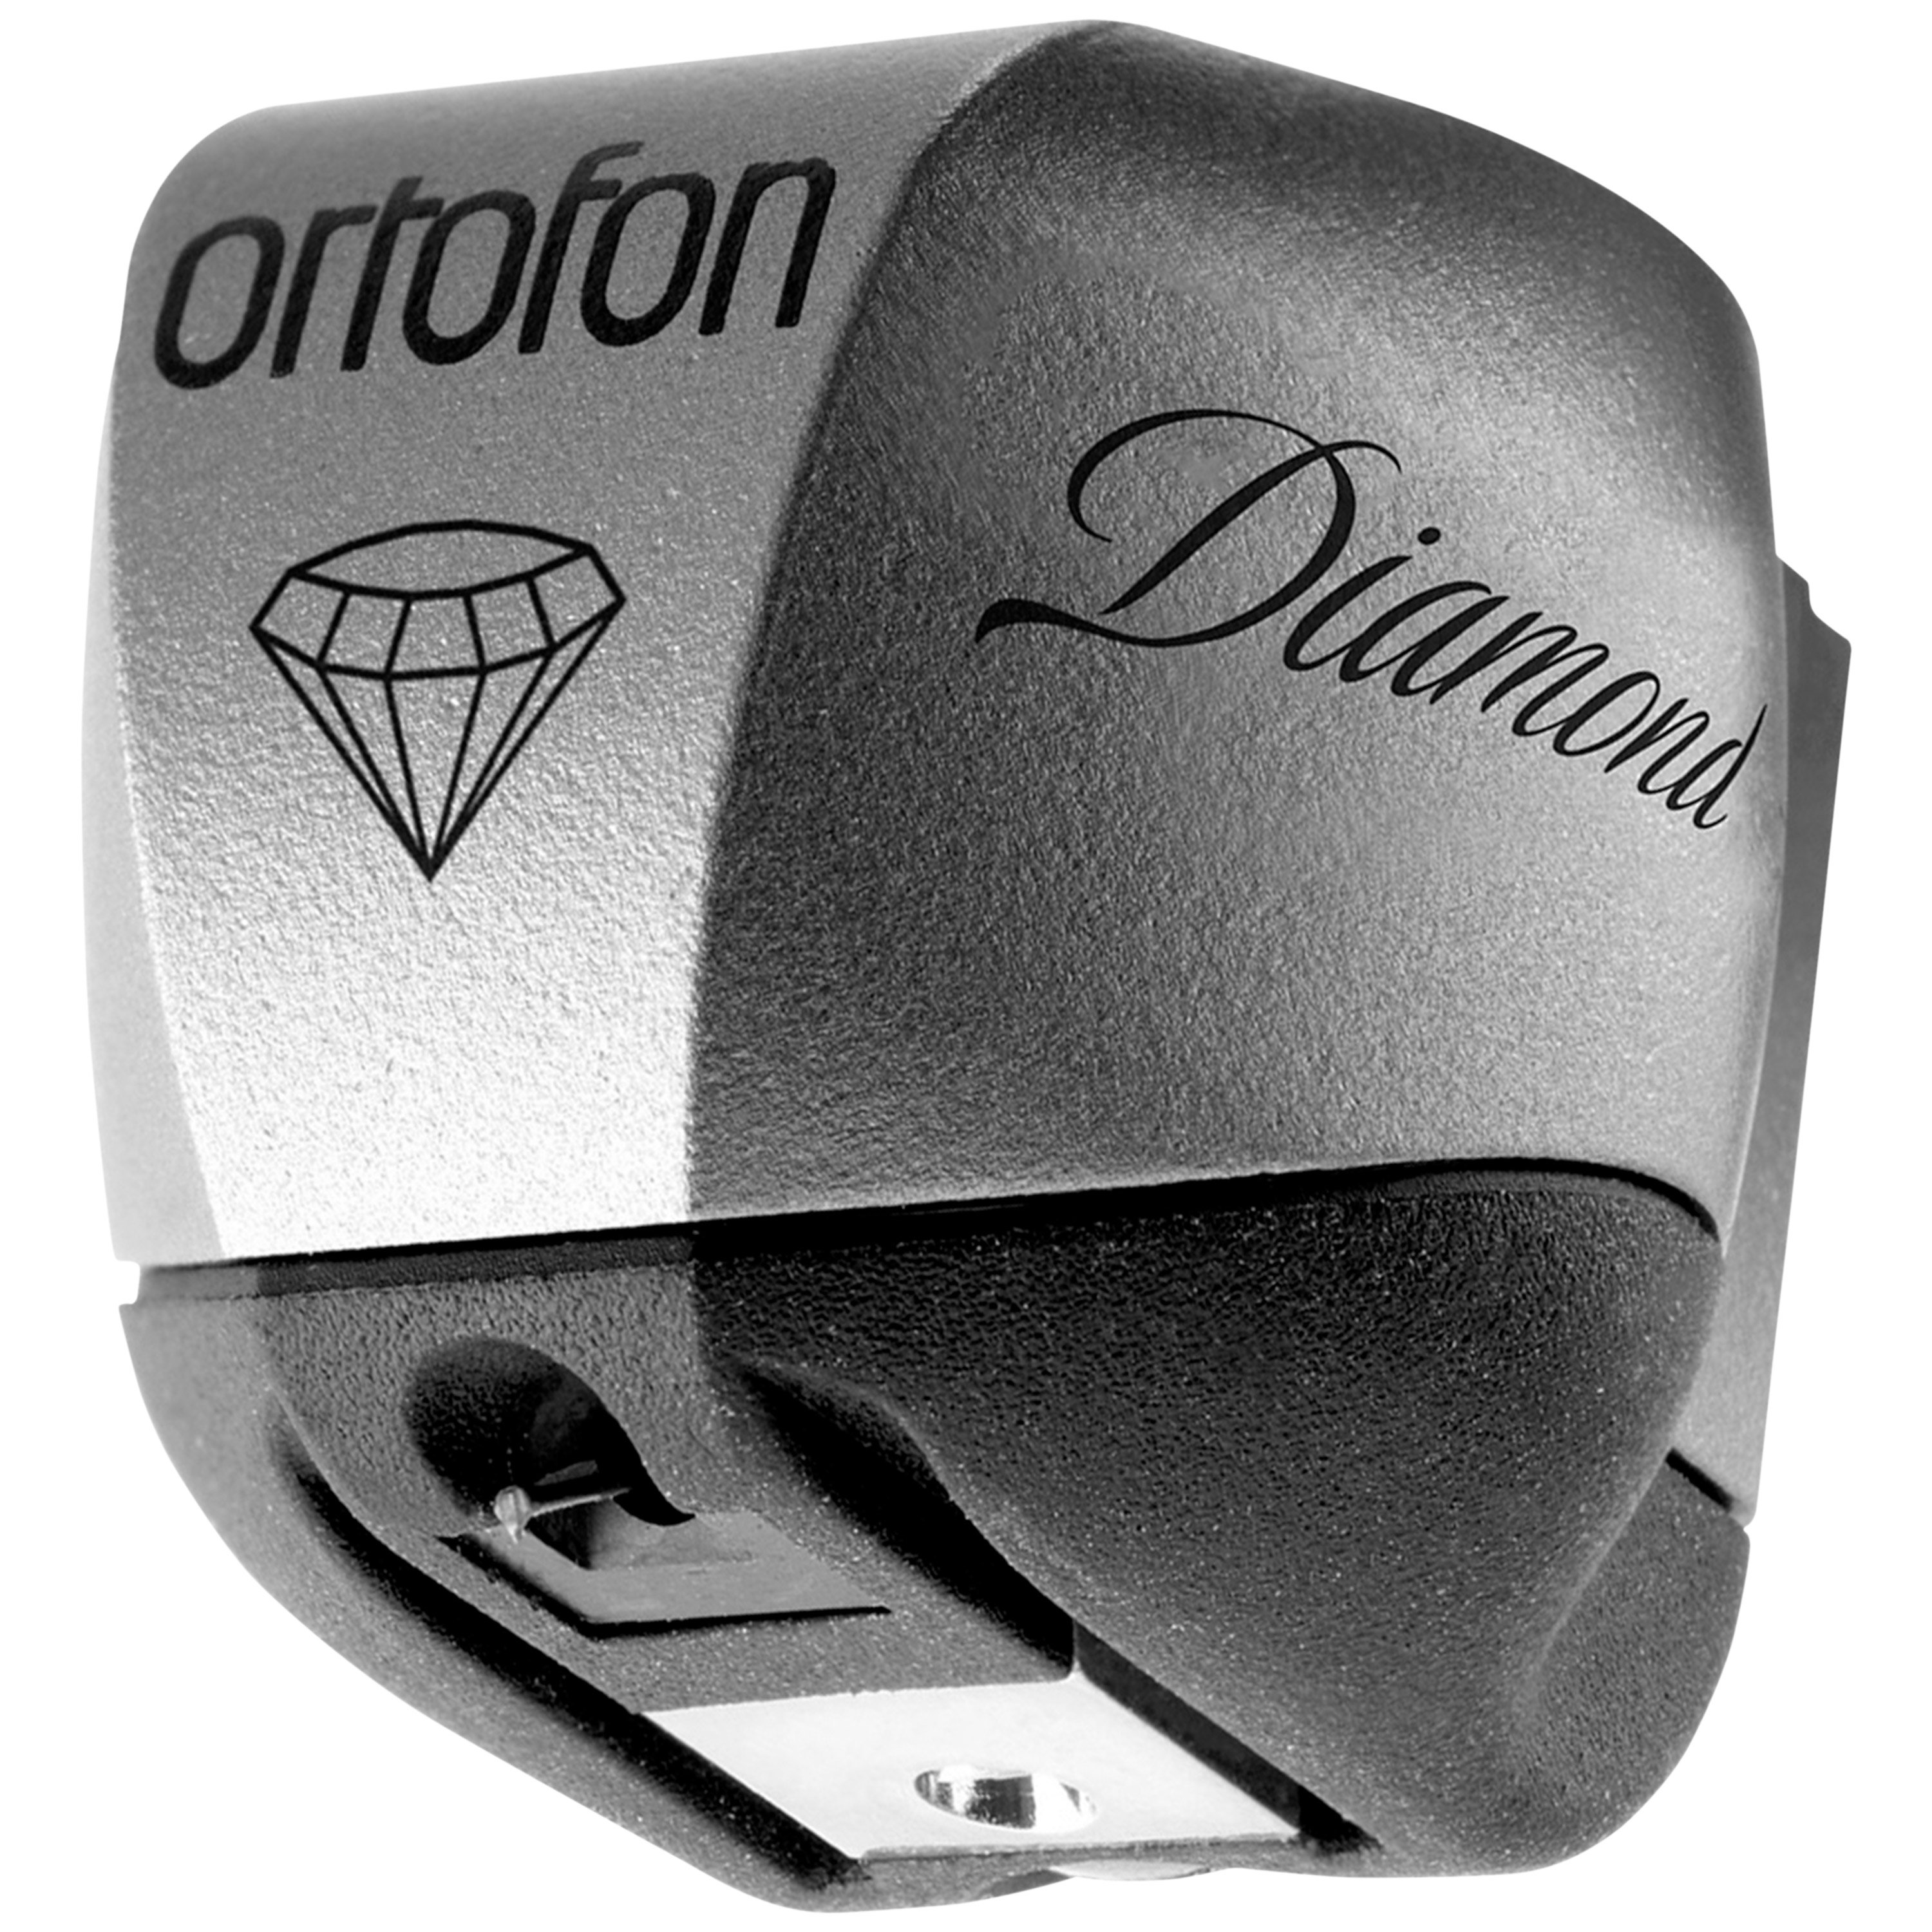 Ortofon Hifi MC Diamond